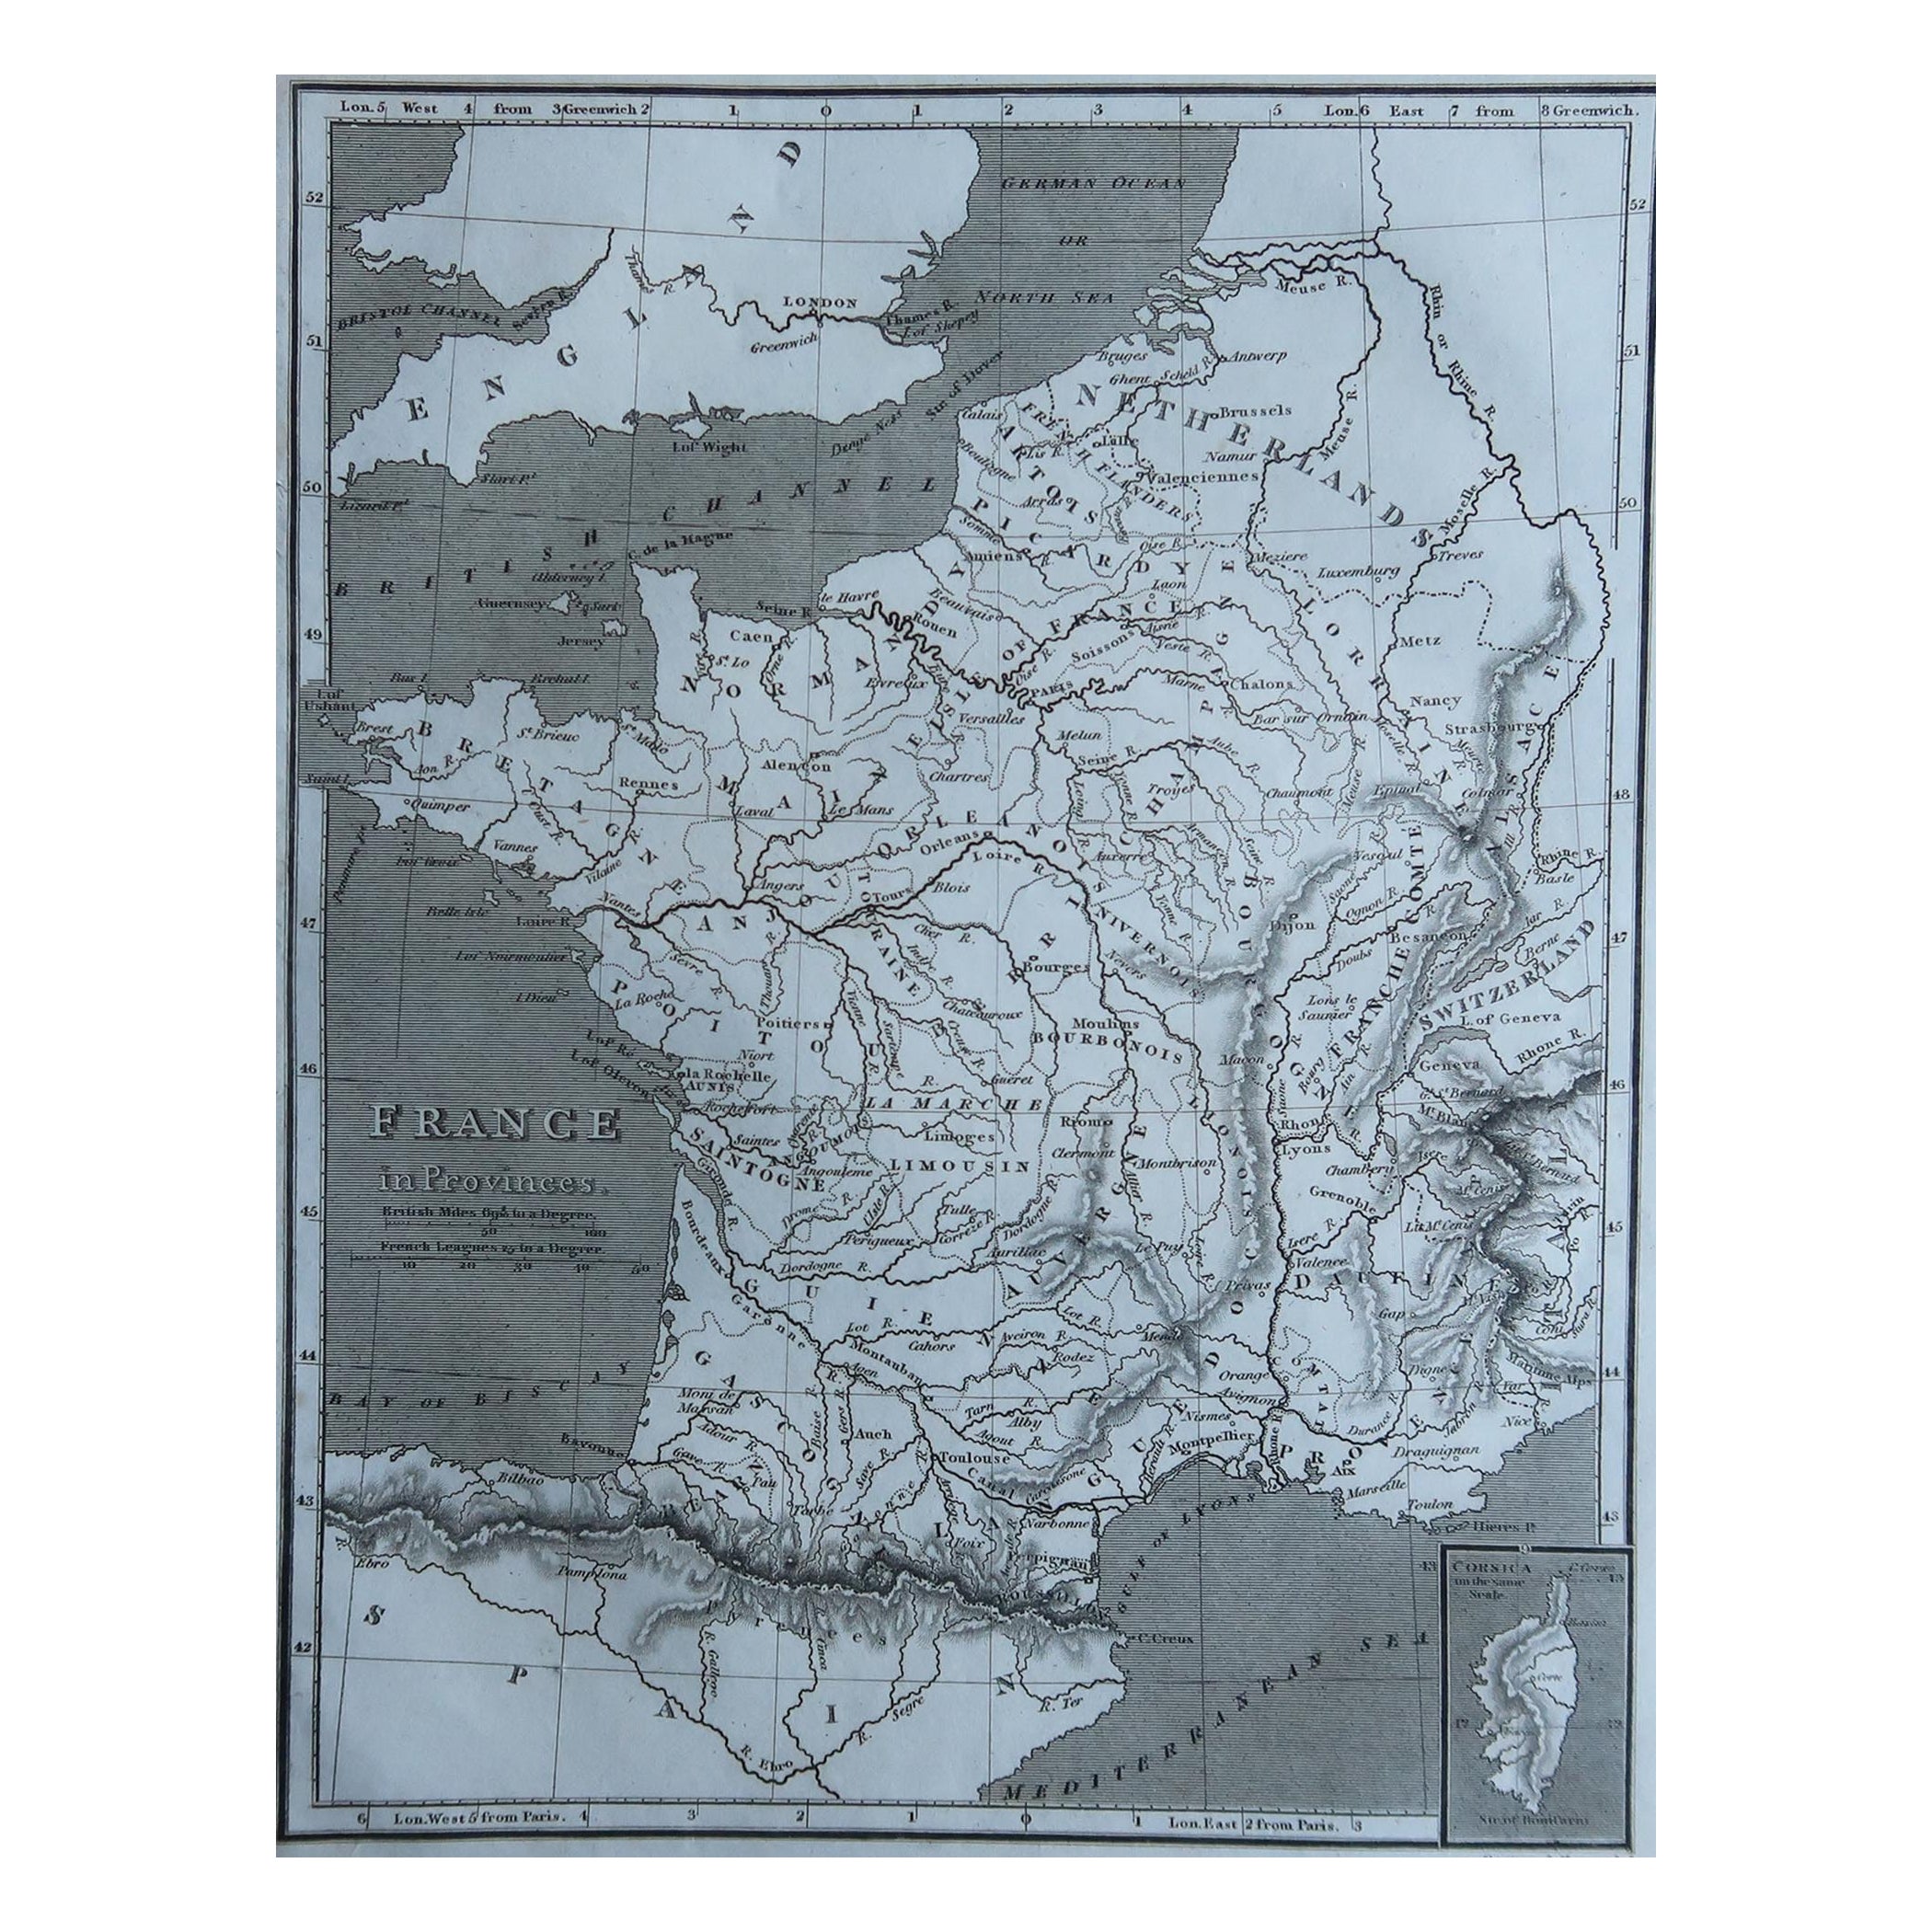 Carte ancienne originale de France, Sherwood, Neely & Jones, datée de 1809